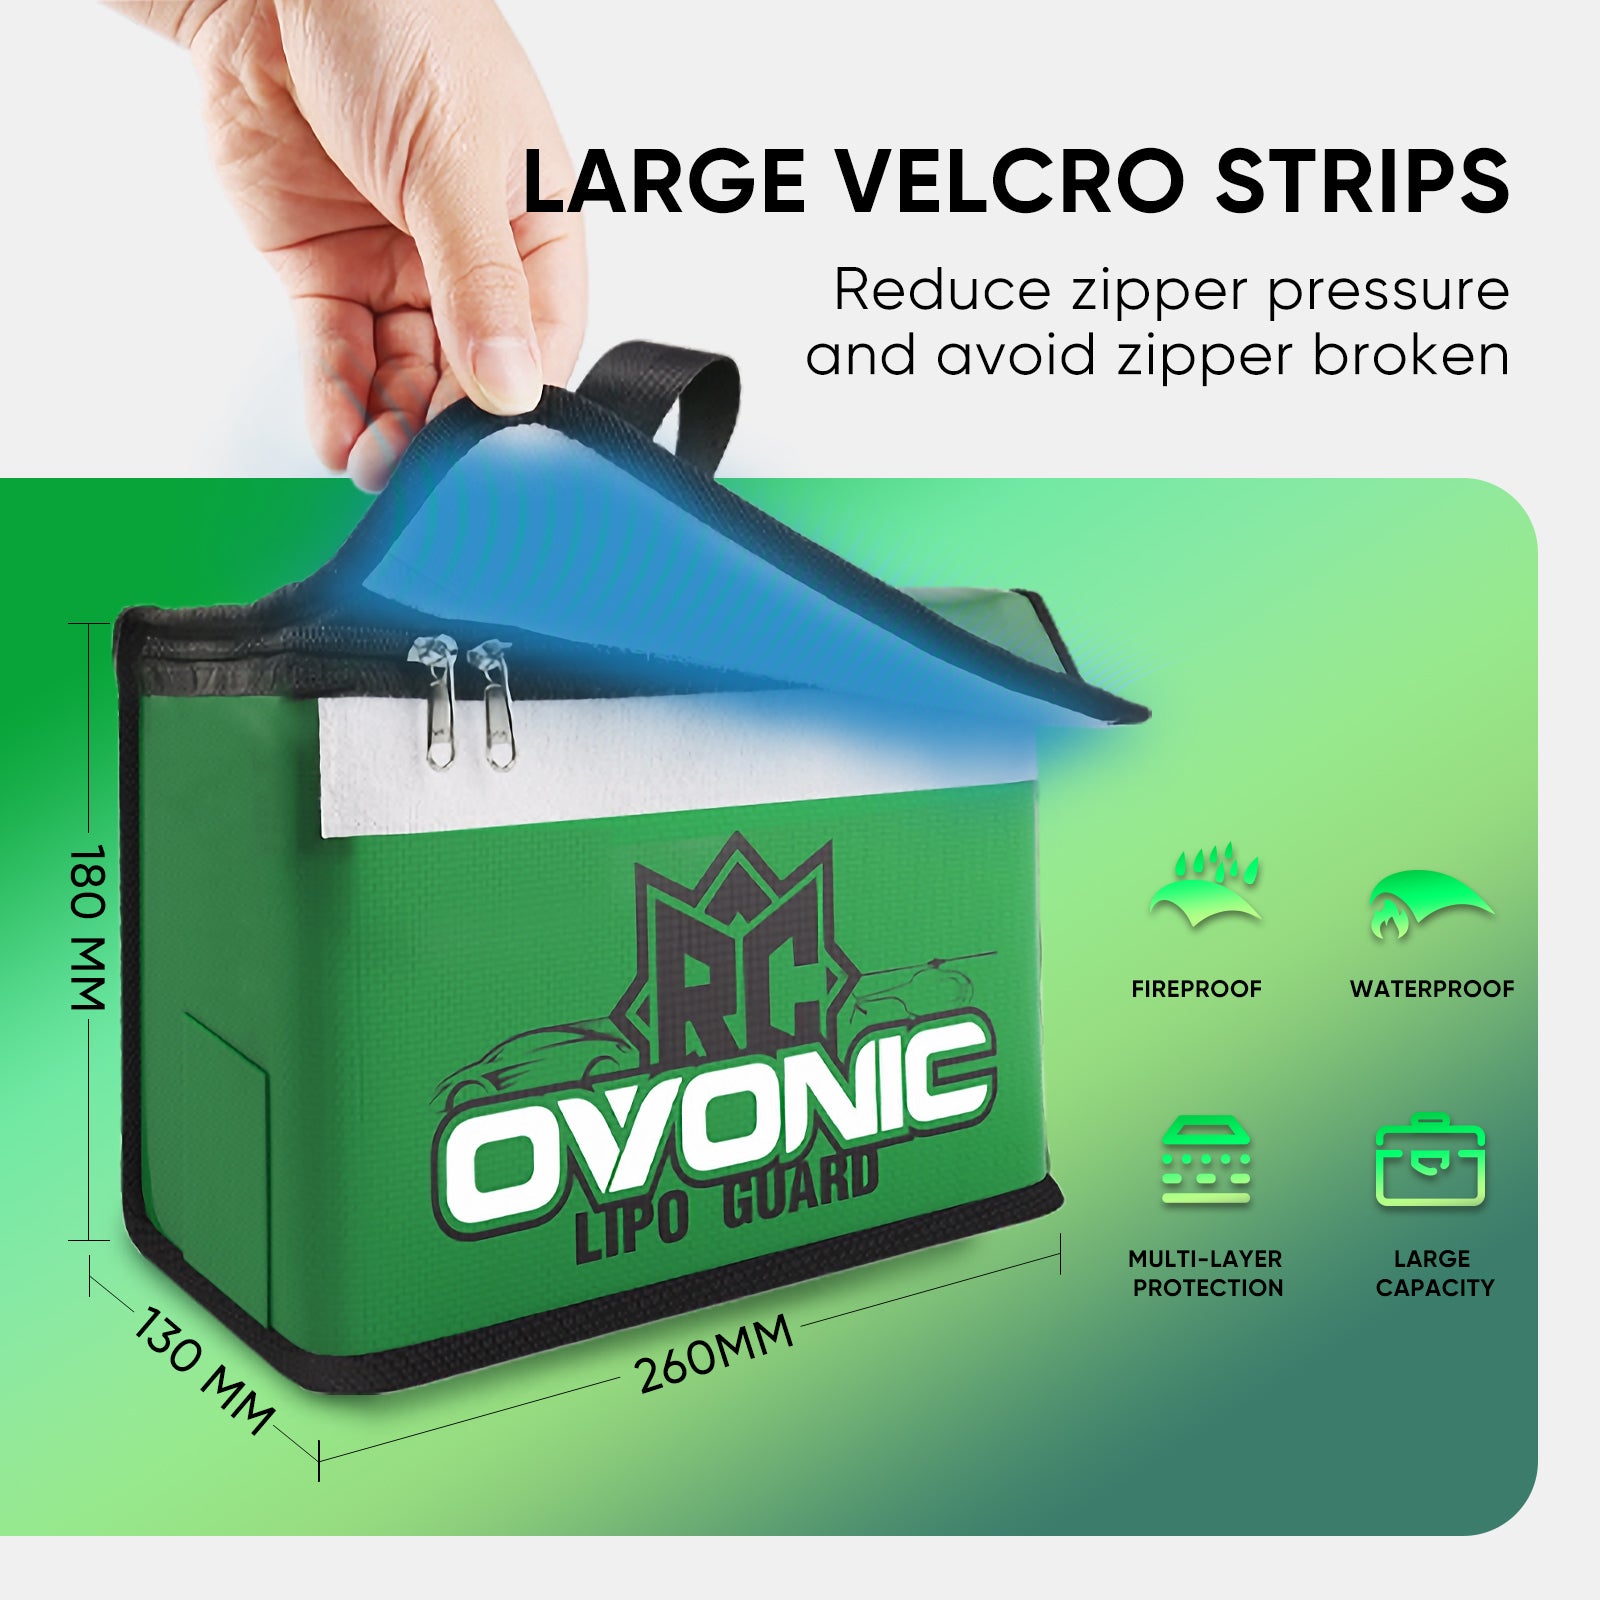  Large Velcro Strips